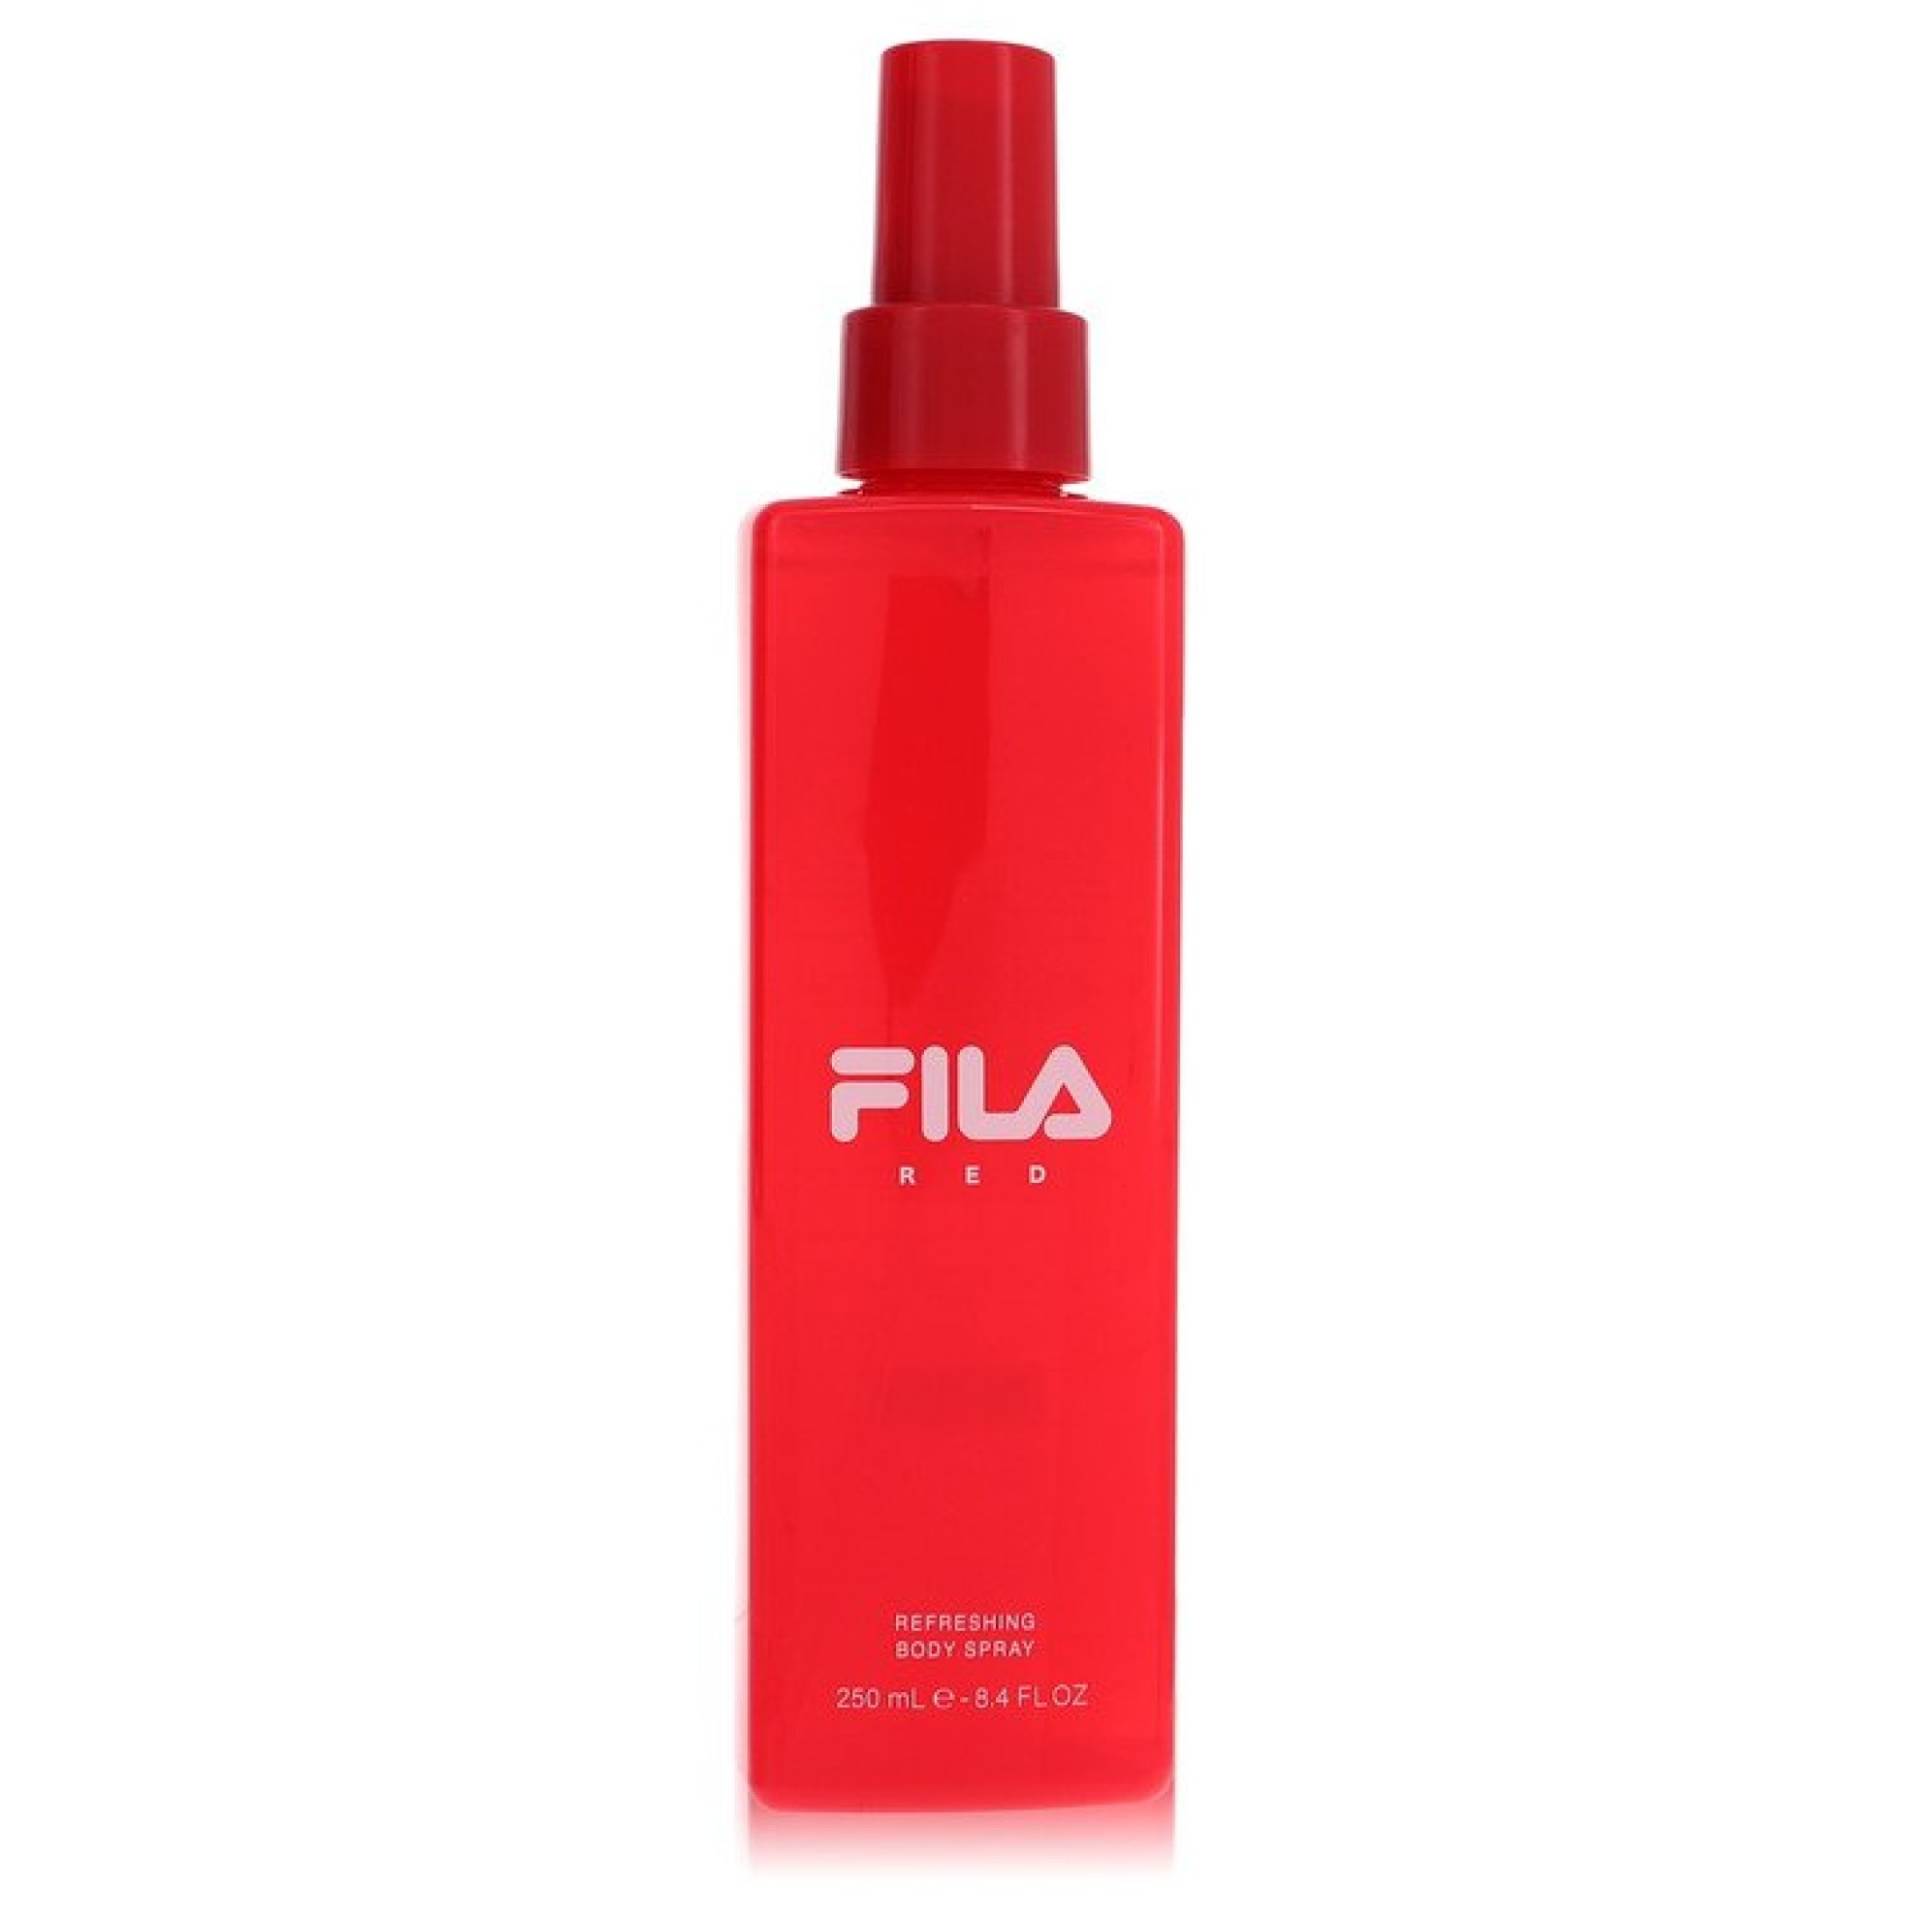 Fila Red Body Spray 248 ml von Fila